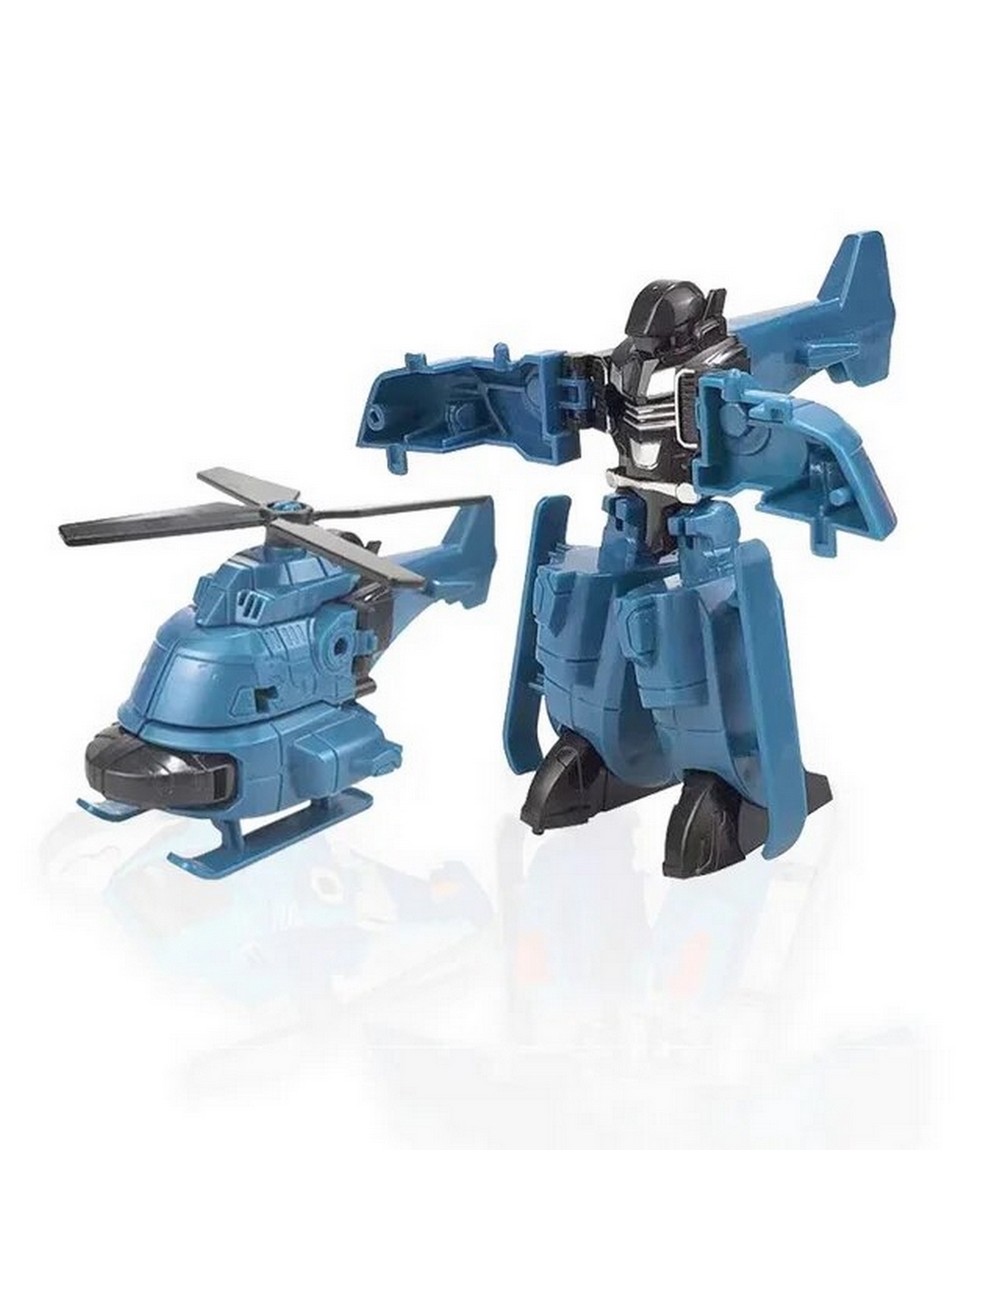 Robot Transformers Coleccionable 23,900.00